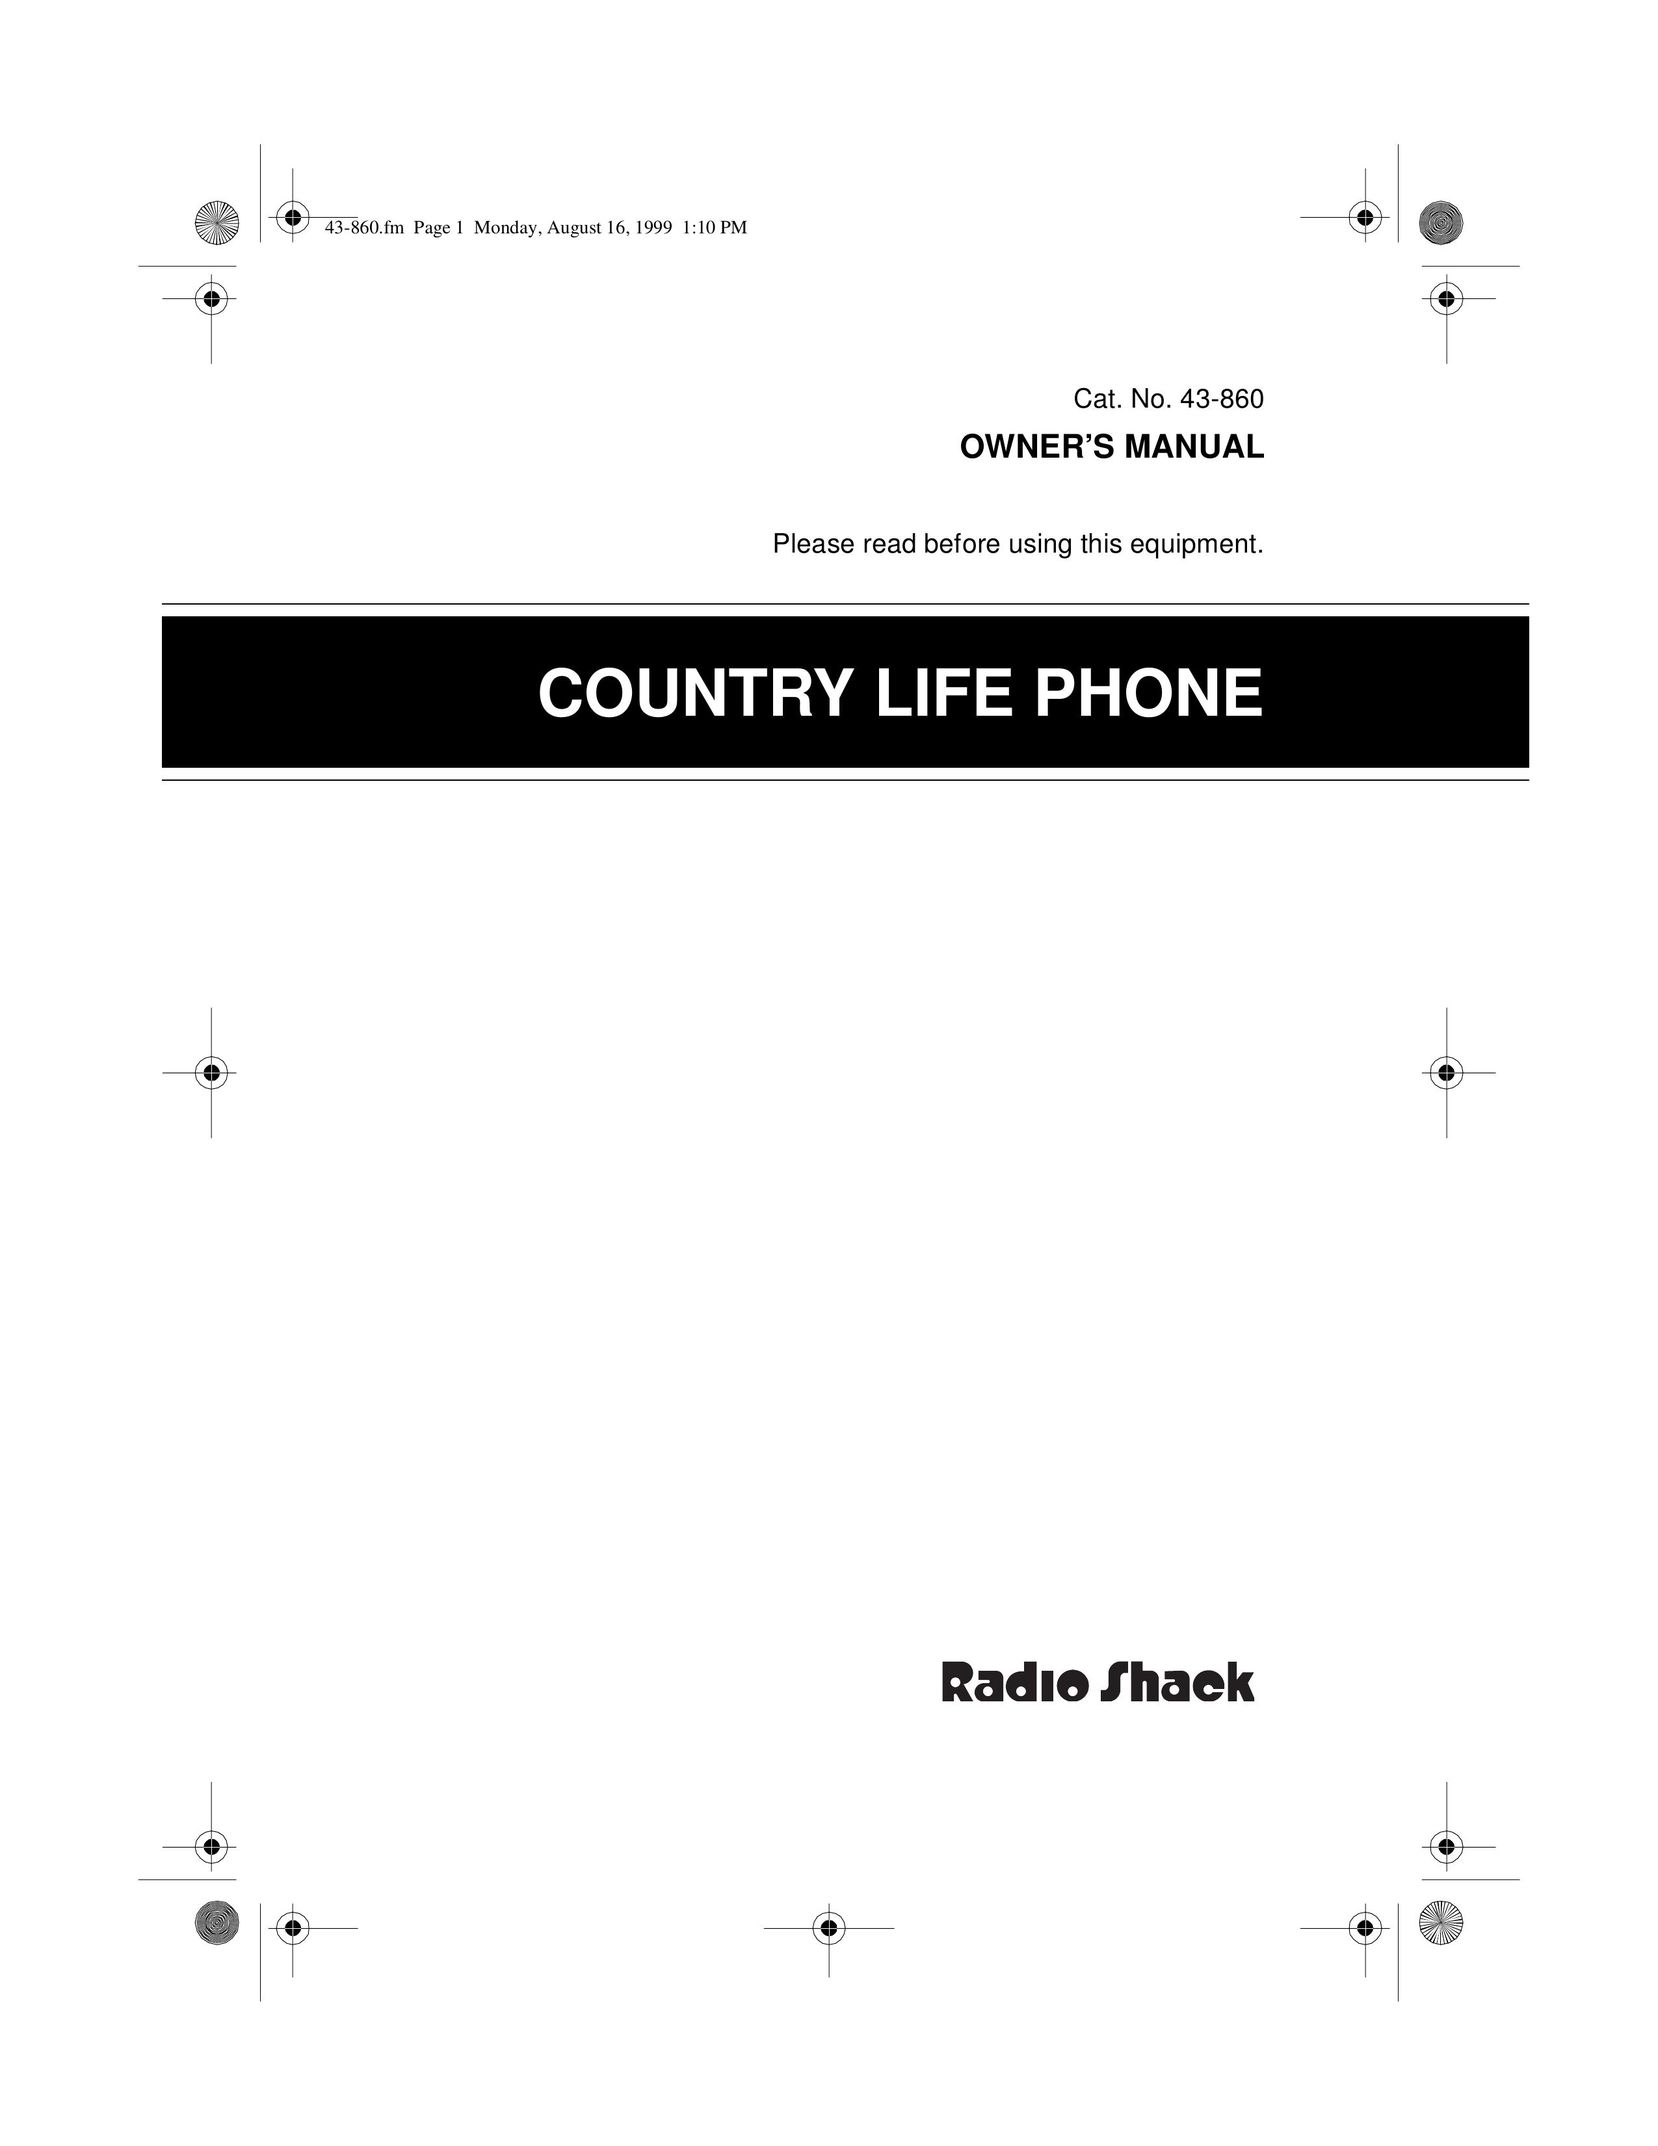 Radio Shack 43-860 Telephone User Manual